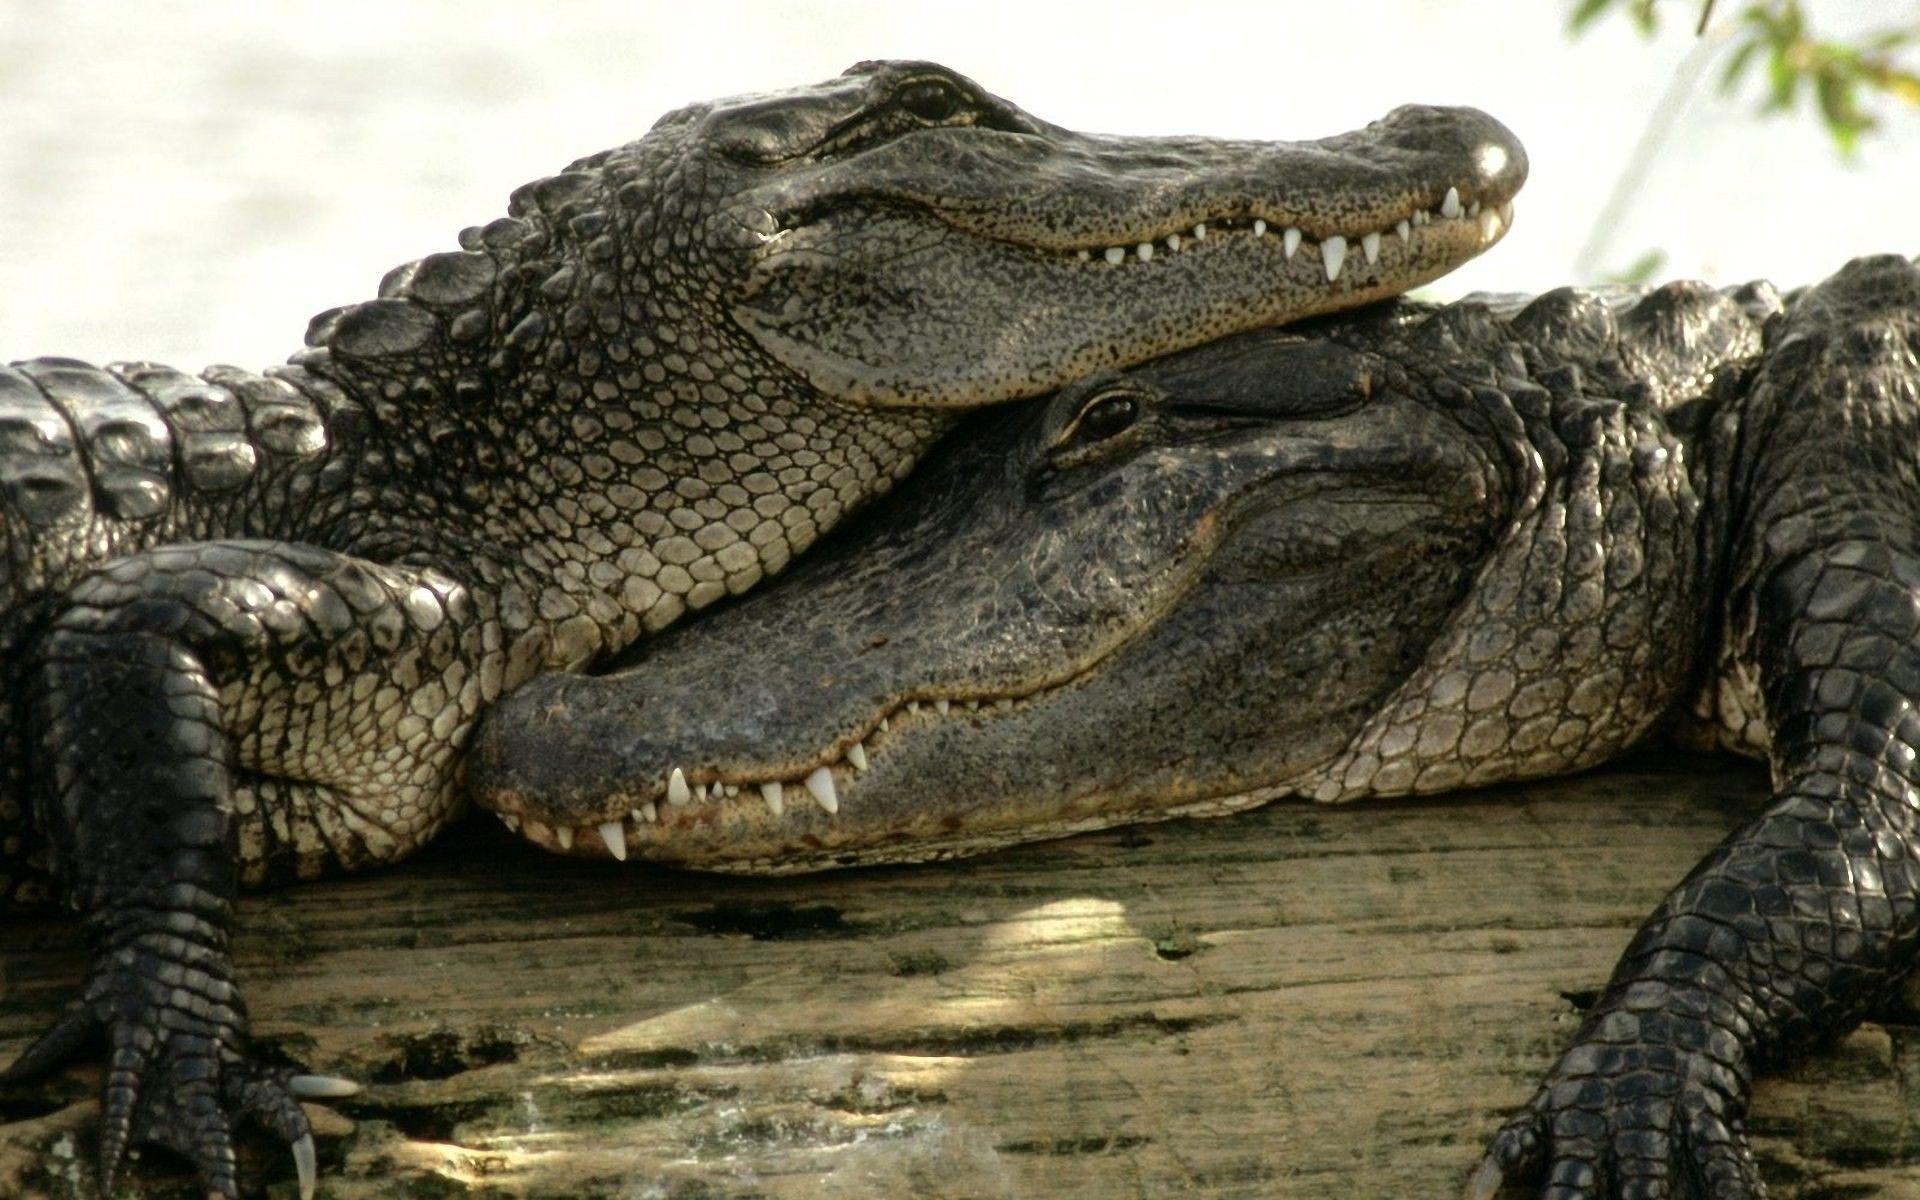 Couple satisfied crocodiles wallpaper and image